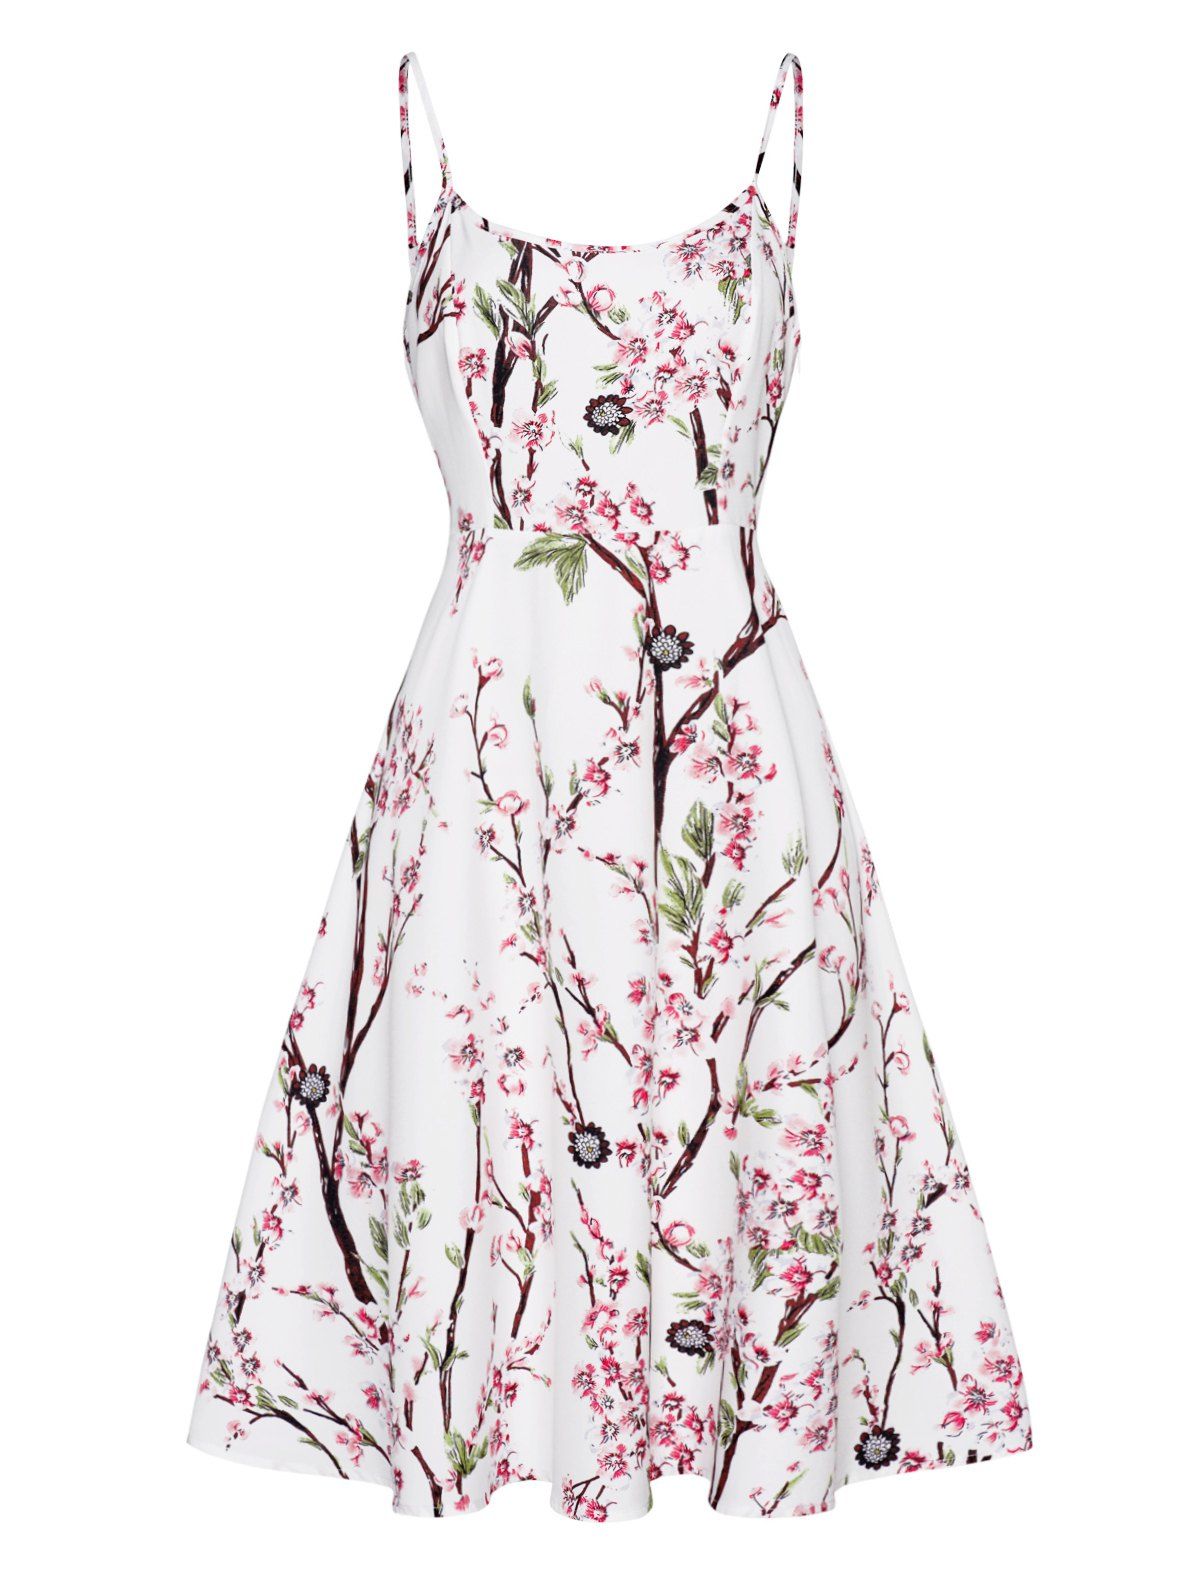 Peach Blossom Print Dress High Waisted Spaghetti Strap Sleeveless A Line Midi Dress - WHITE XXL